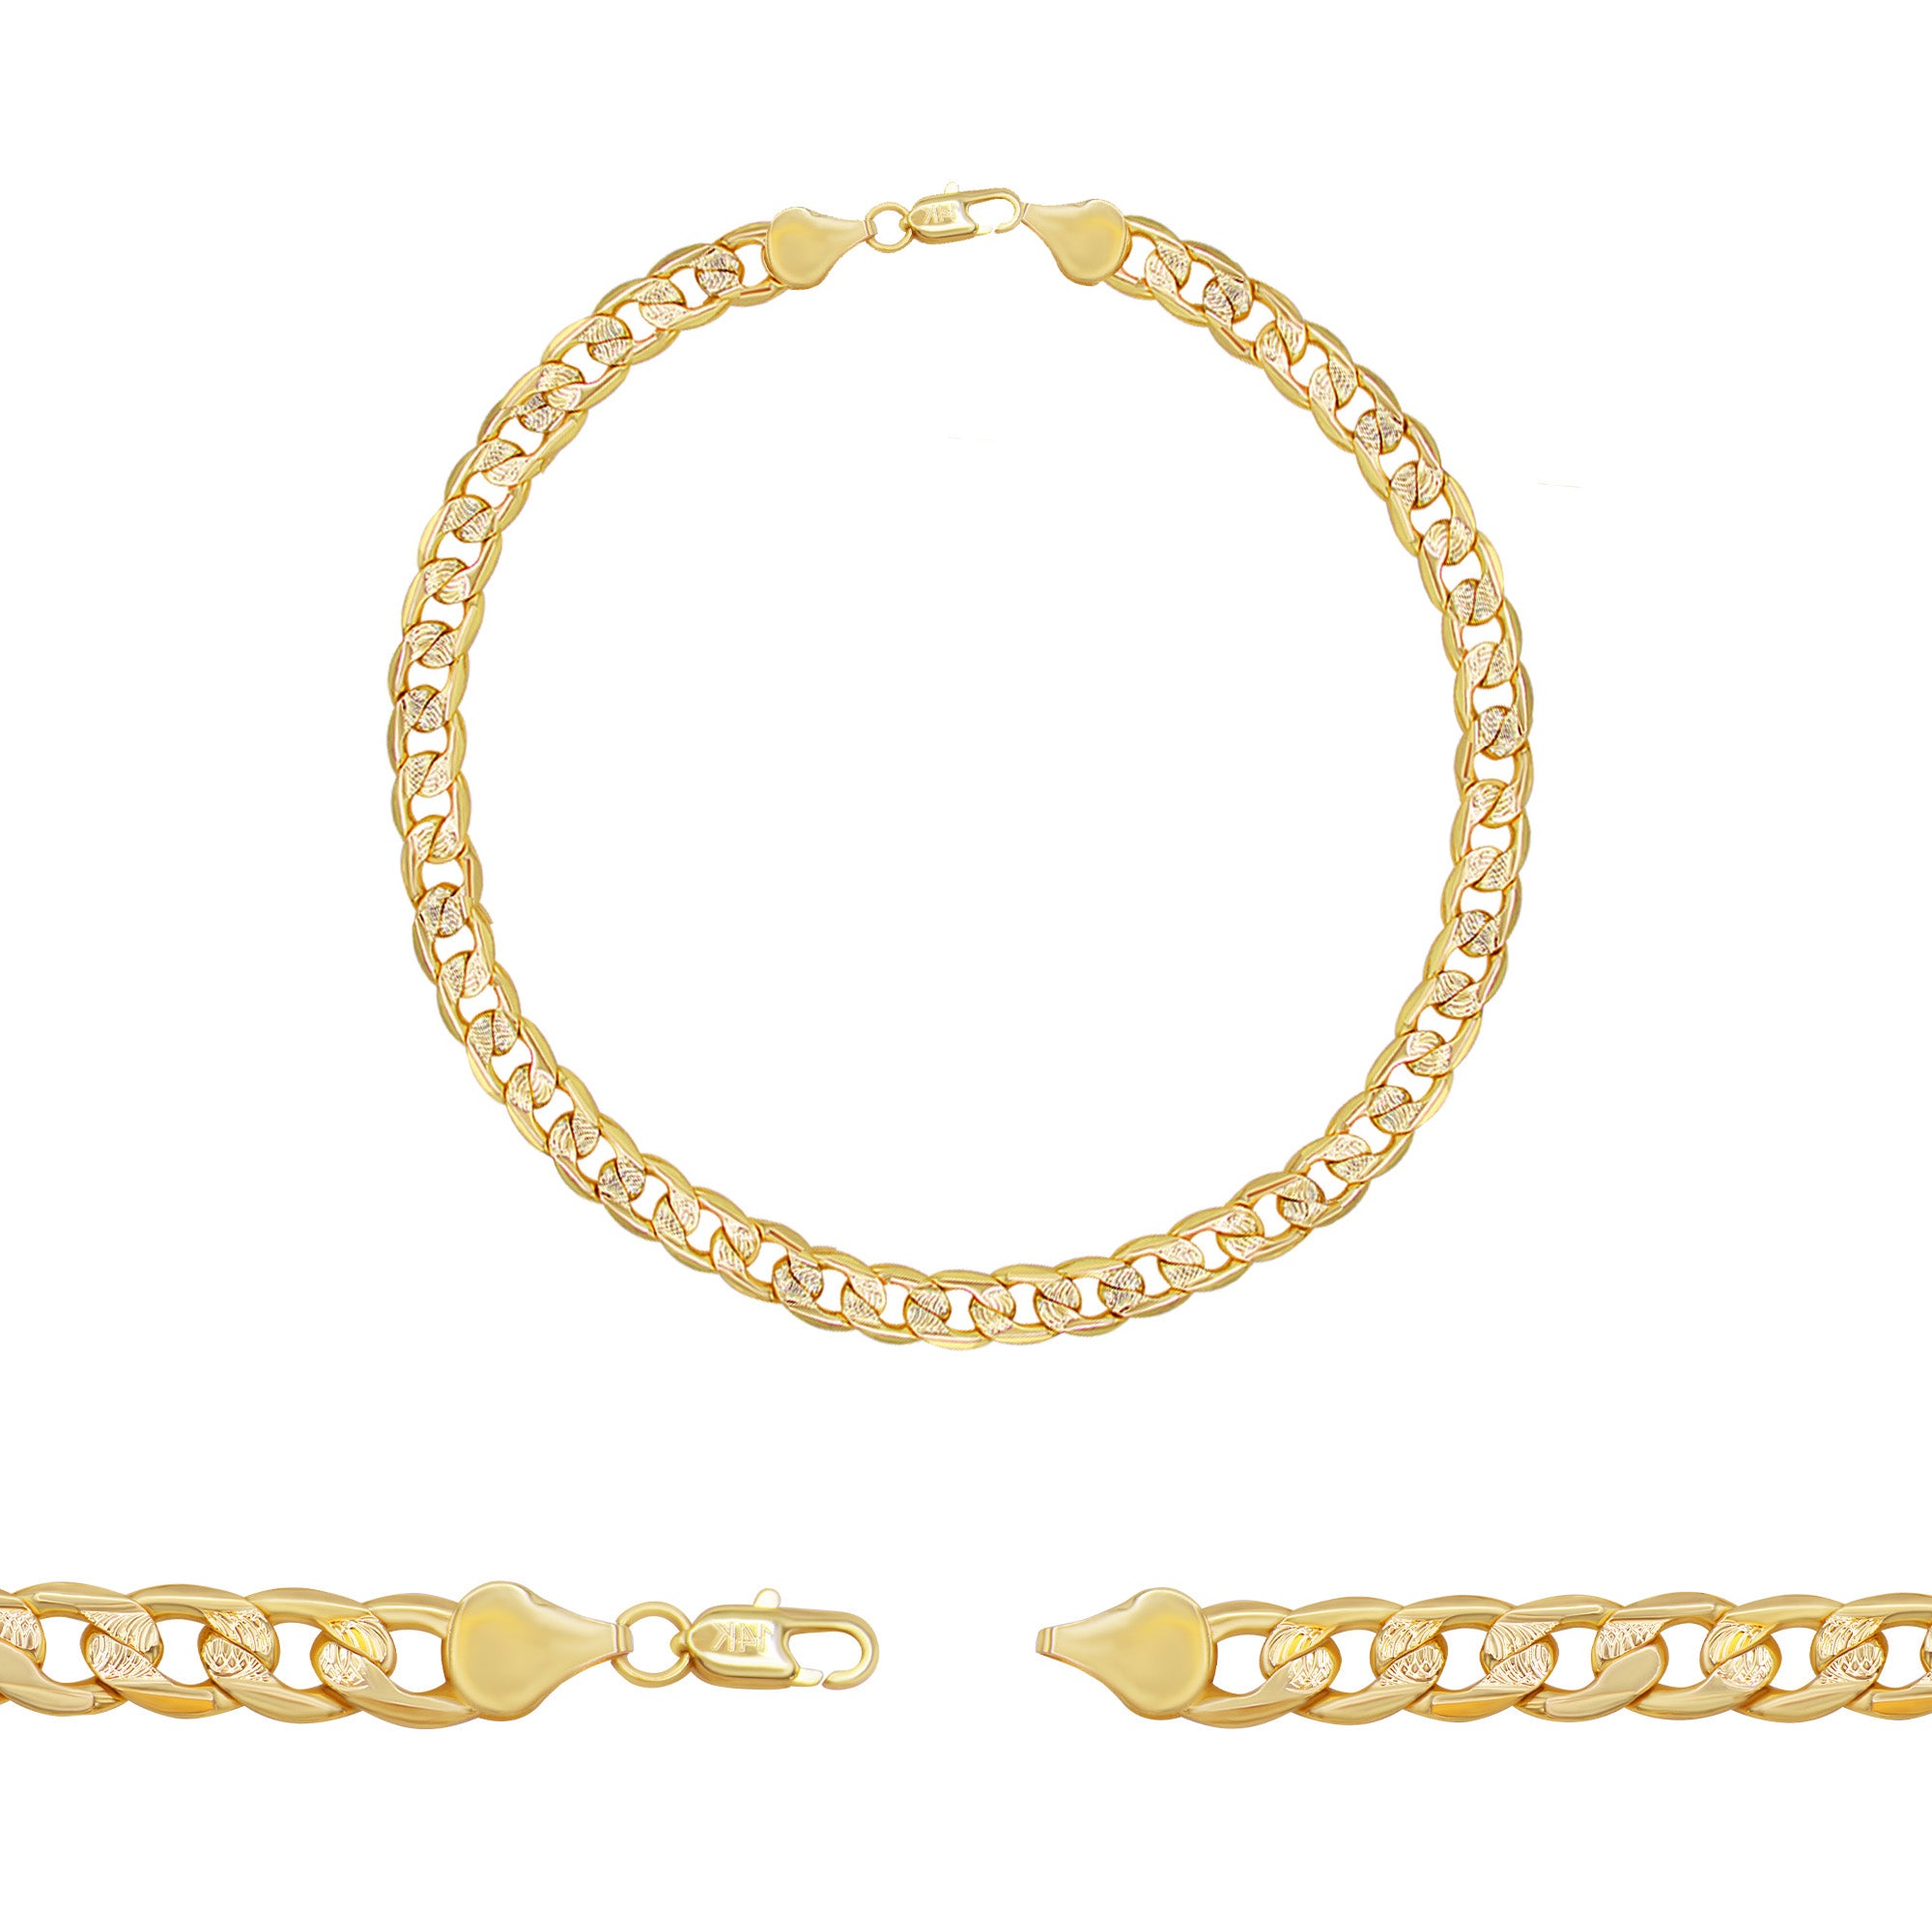 7mm Diamond Cut Franco Bracelet, 14K Gold Mens Bracelet, Solid Gold 8.5 Inches / Luxury Lobster Clasp